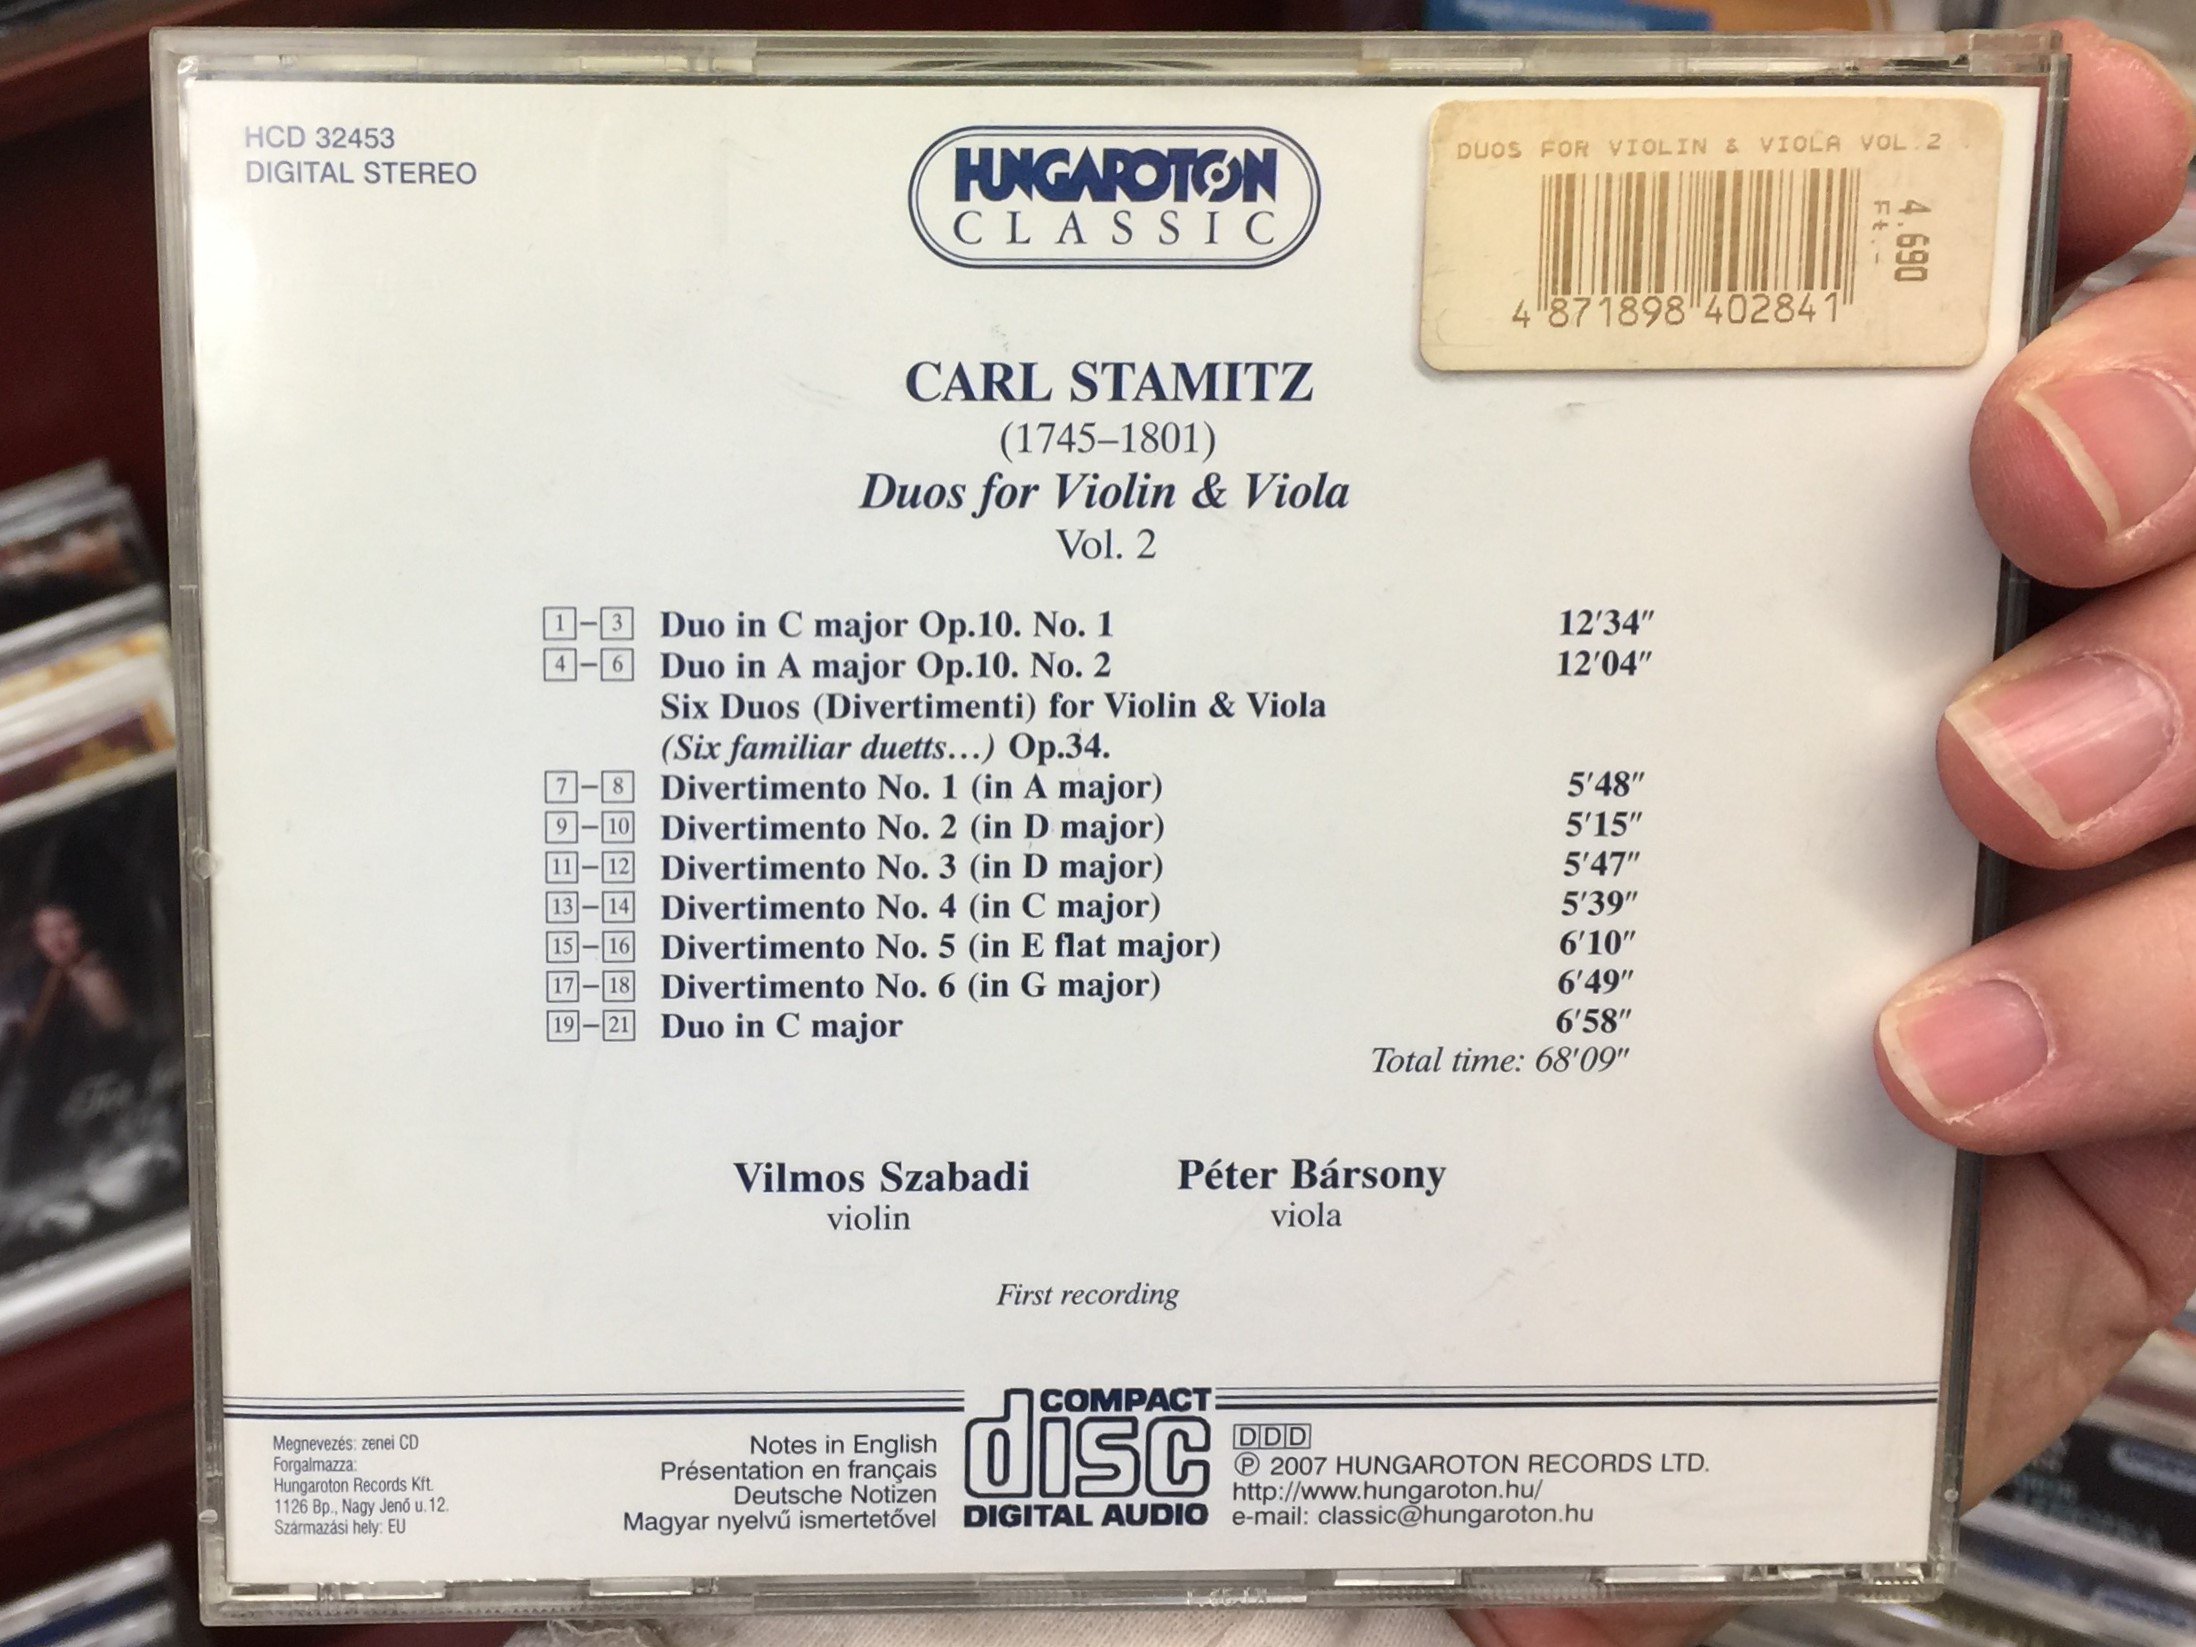 carl-stamitz-duos-for-violin-and-viola-vilmos-szabadi-peter-barsony-hungaroton-classic-audio-cd-2007-stereo-hcd-32453-2-.jpg